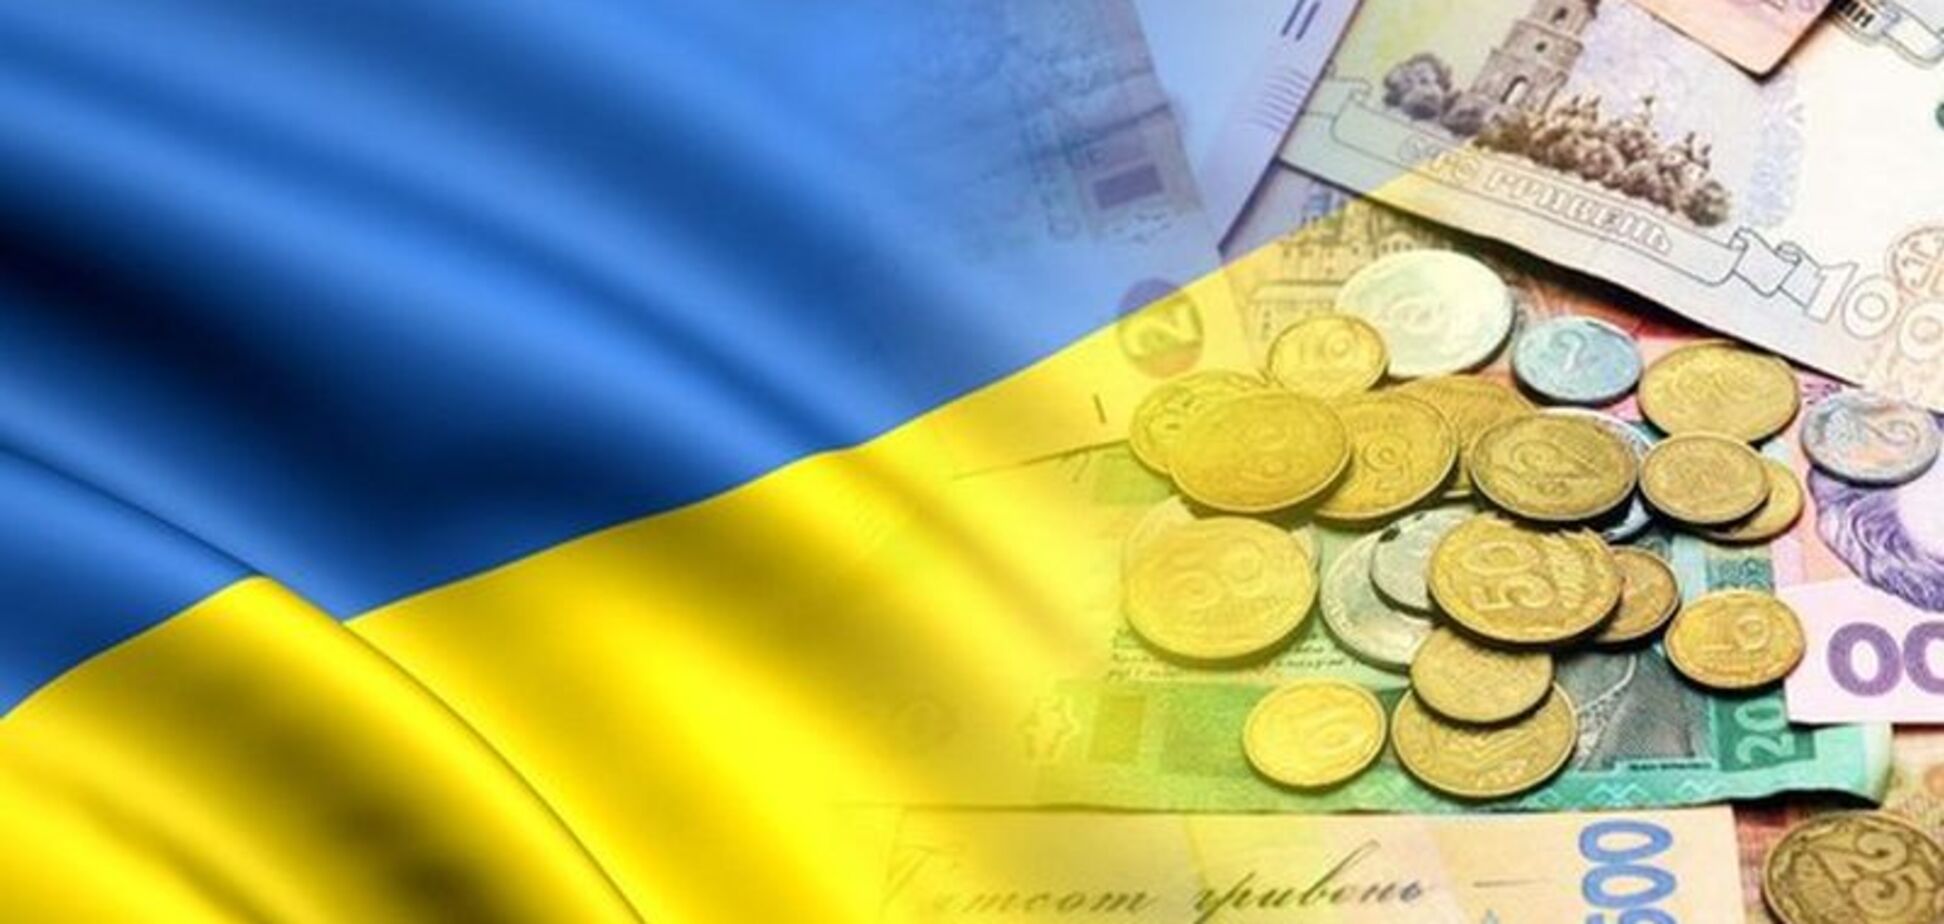 Економіка України